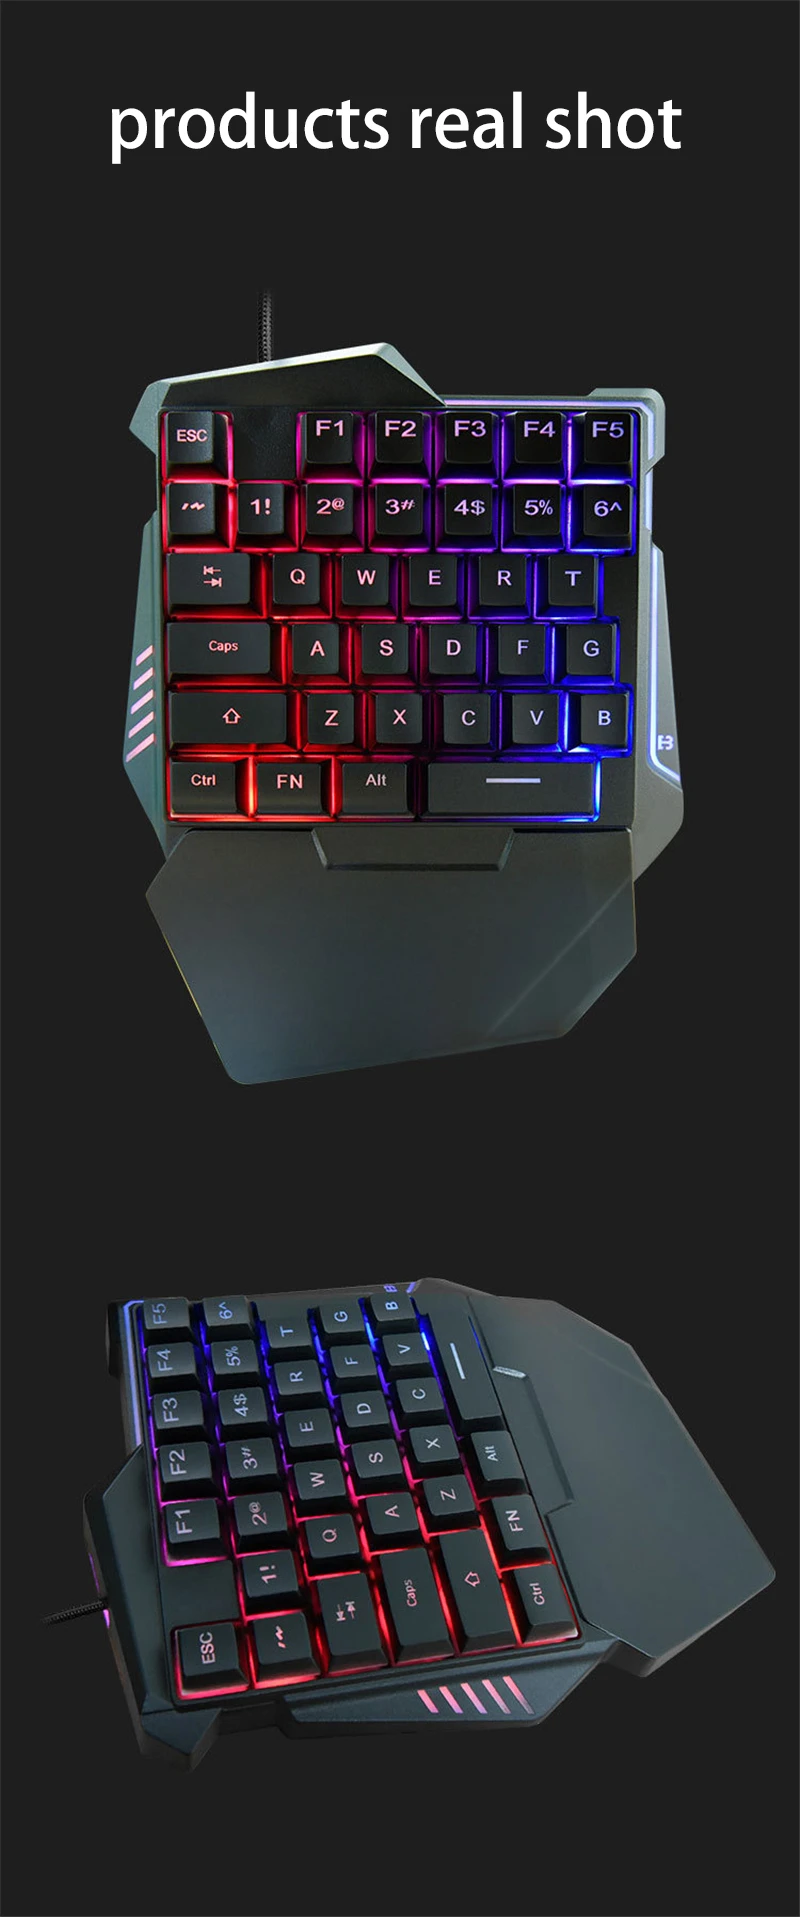  (Black Switch)One-Handed RGB Mechanical Gaming Keyboard SADES  Half Keyboard Gaming Keypad Small Gaming Keyboard for PUBG/Fps Games/LOL/APEX/CSGO/Rainbow  Six : Video Games